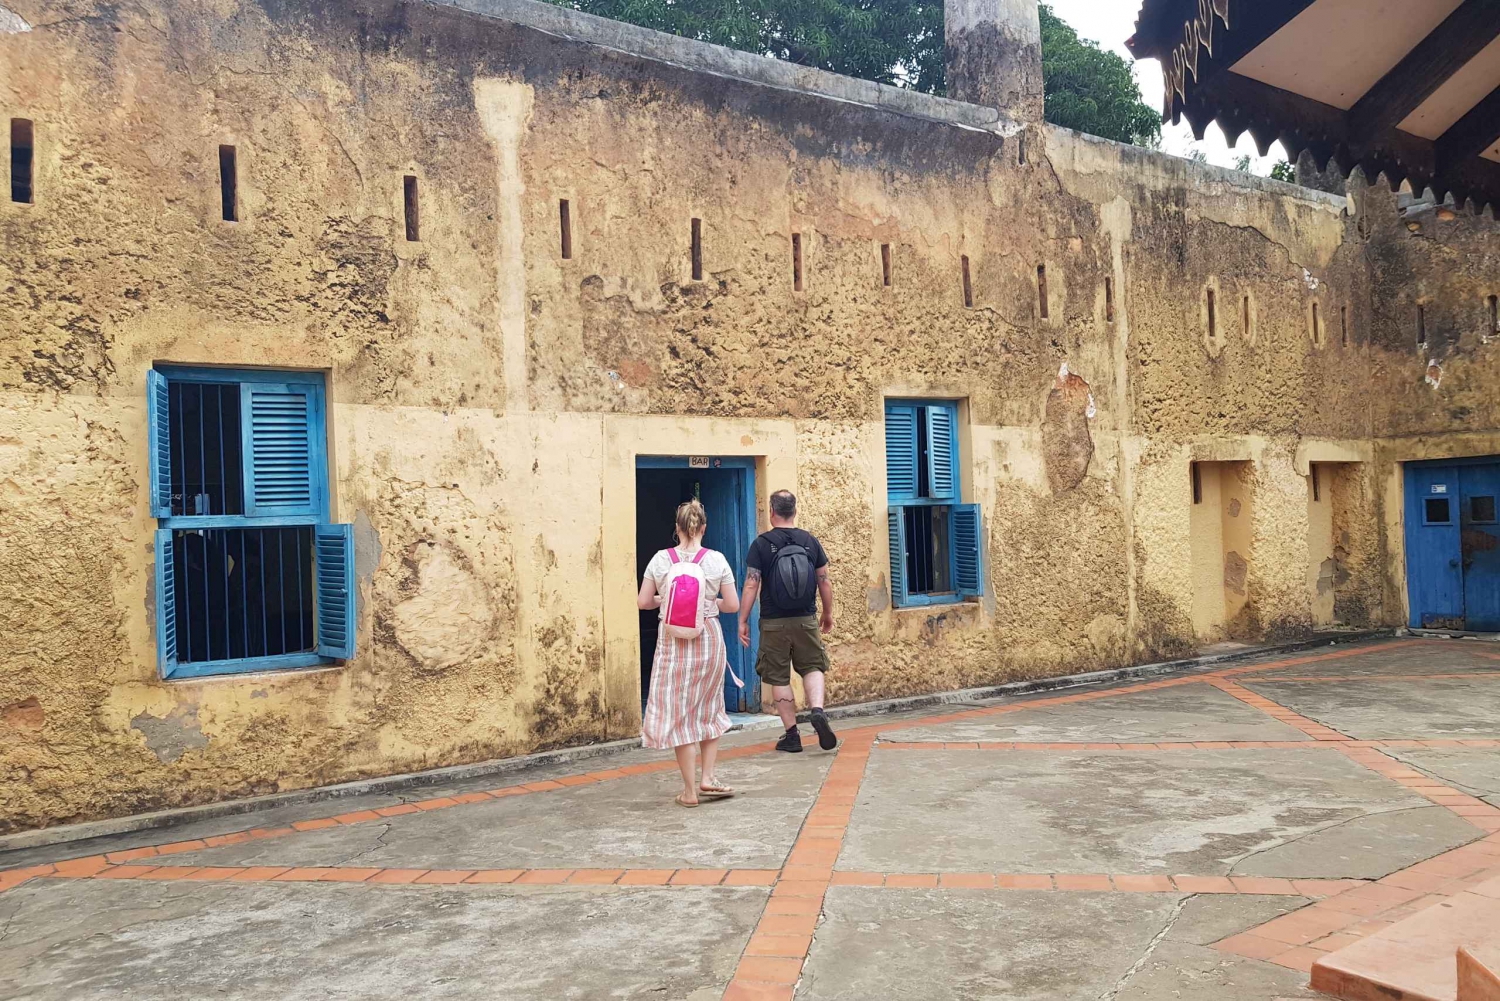 From Zanzibar: Prison Island Tour